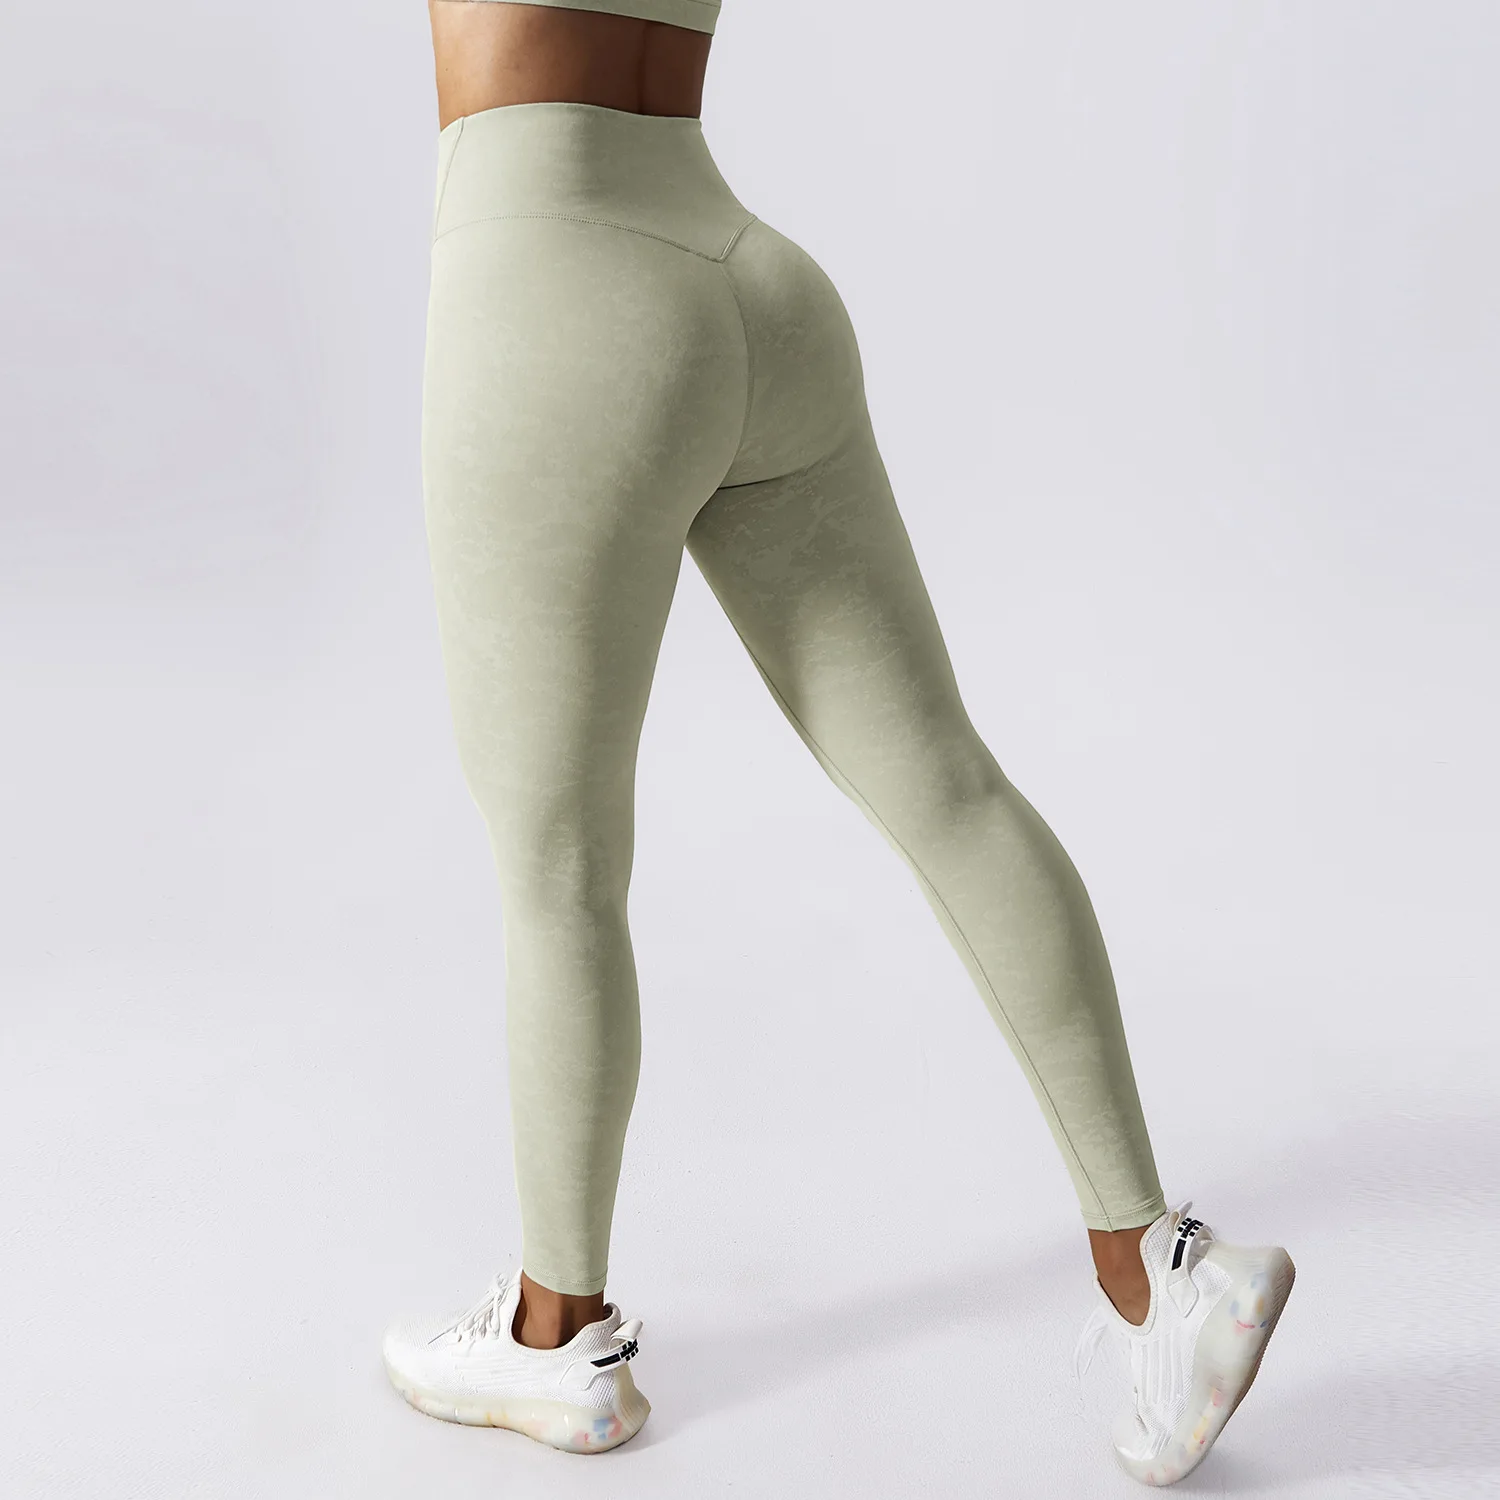 Aola Seamless Yoga Set Fitness Women Gym Fitness Sets Workout Leggings ...